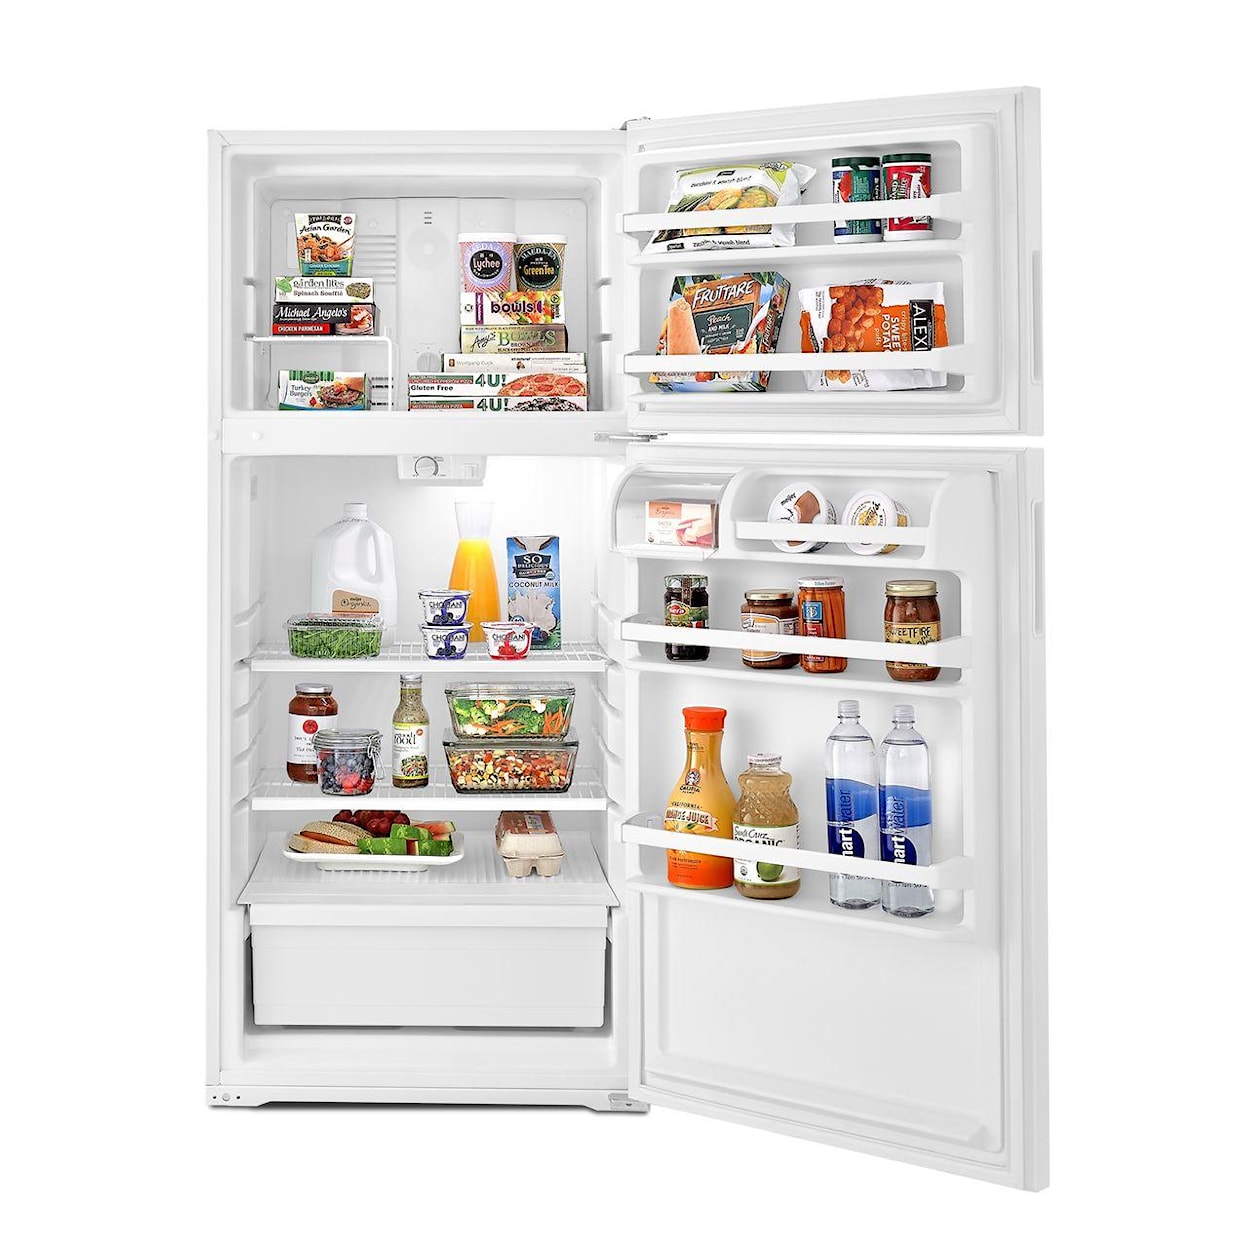 Amana Top Mount Refrigerators 14 cu. ft. Top-Freezer Refrigerator